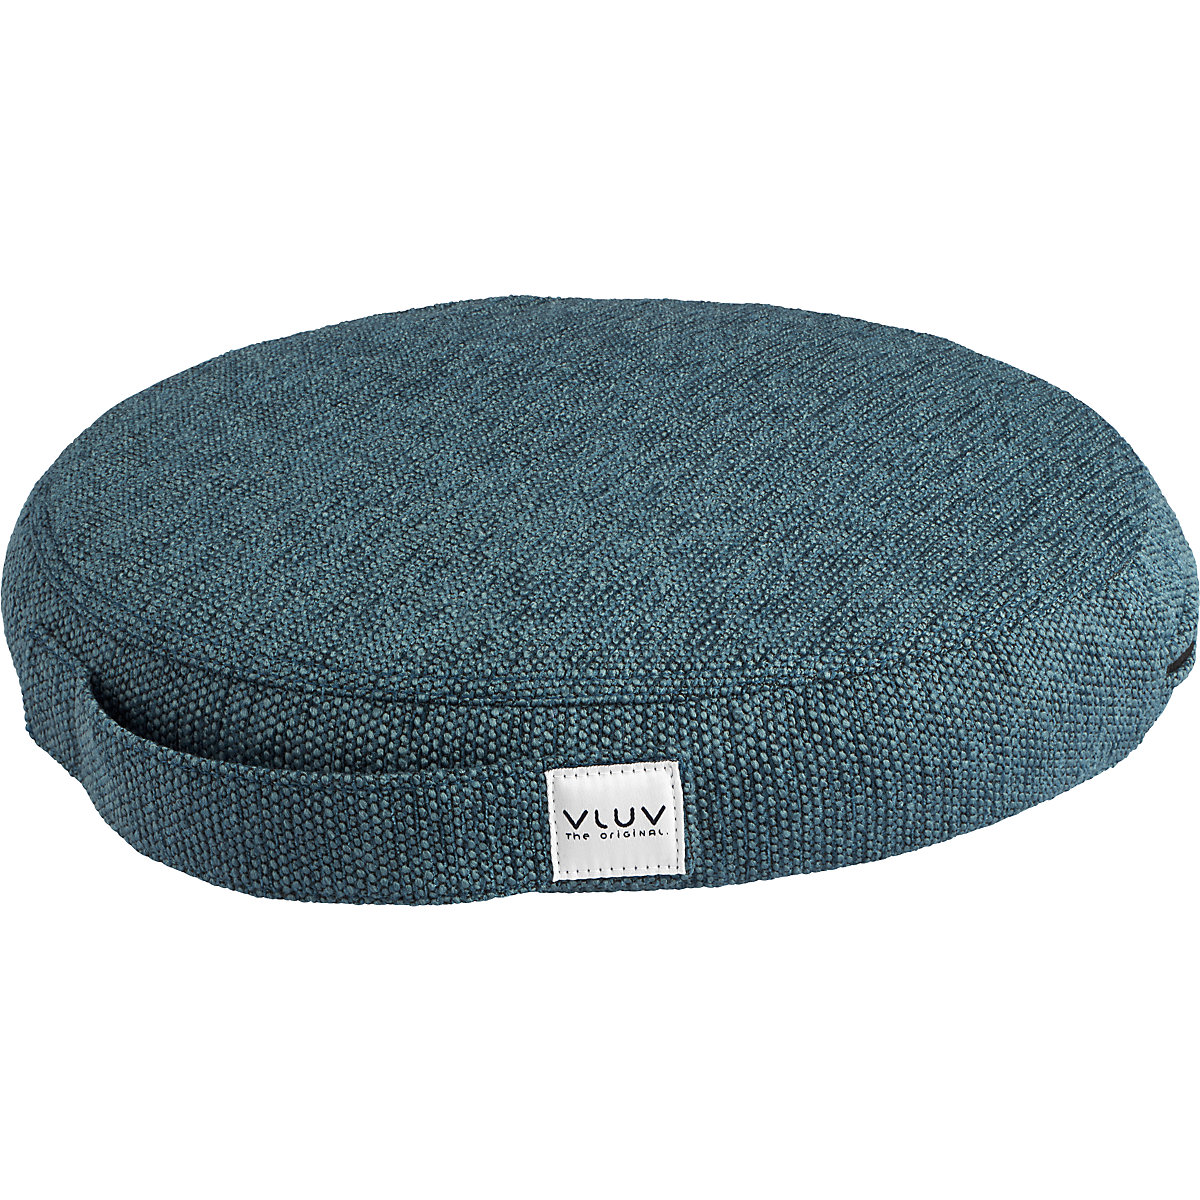 PIL&PED STOV balance cushion – VLUV, with fabric cover, Ø 360 mm, petrol